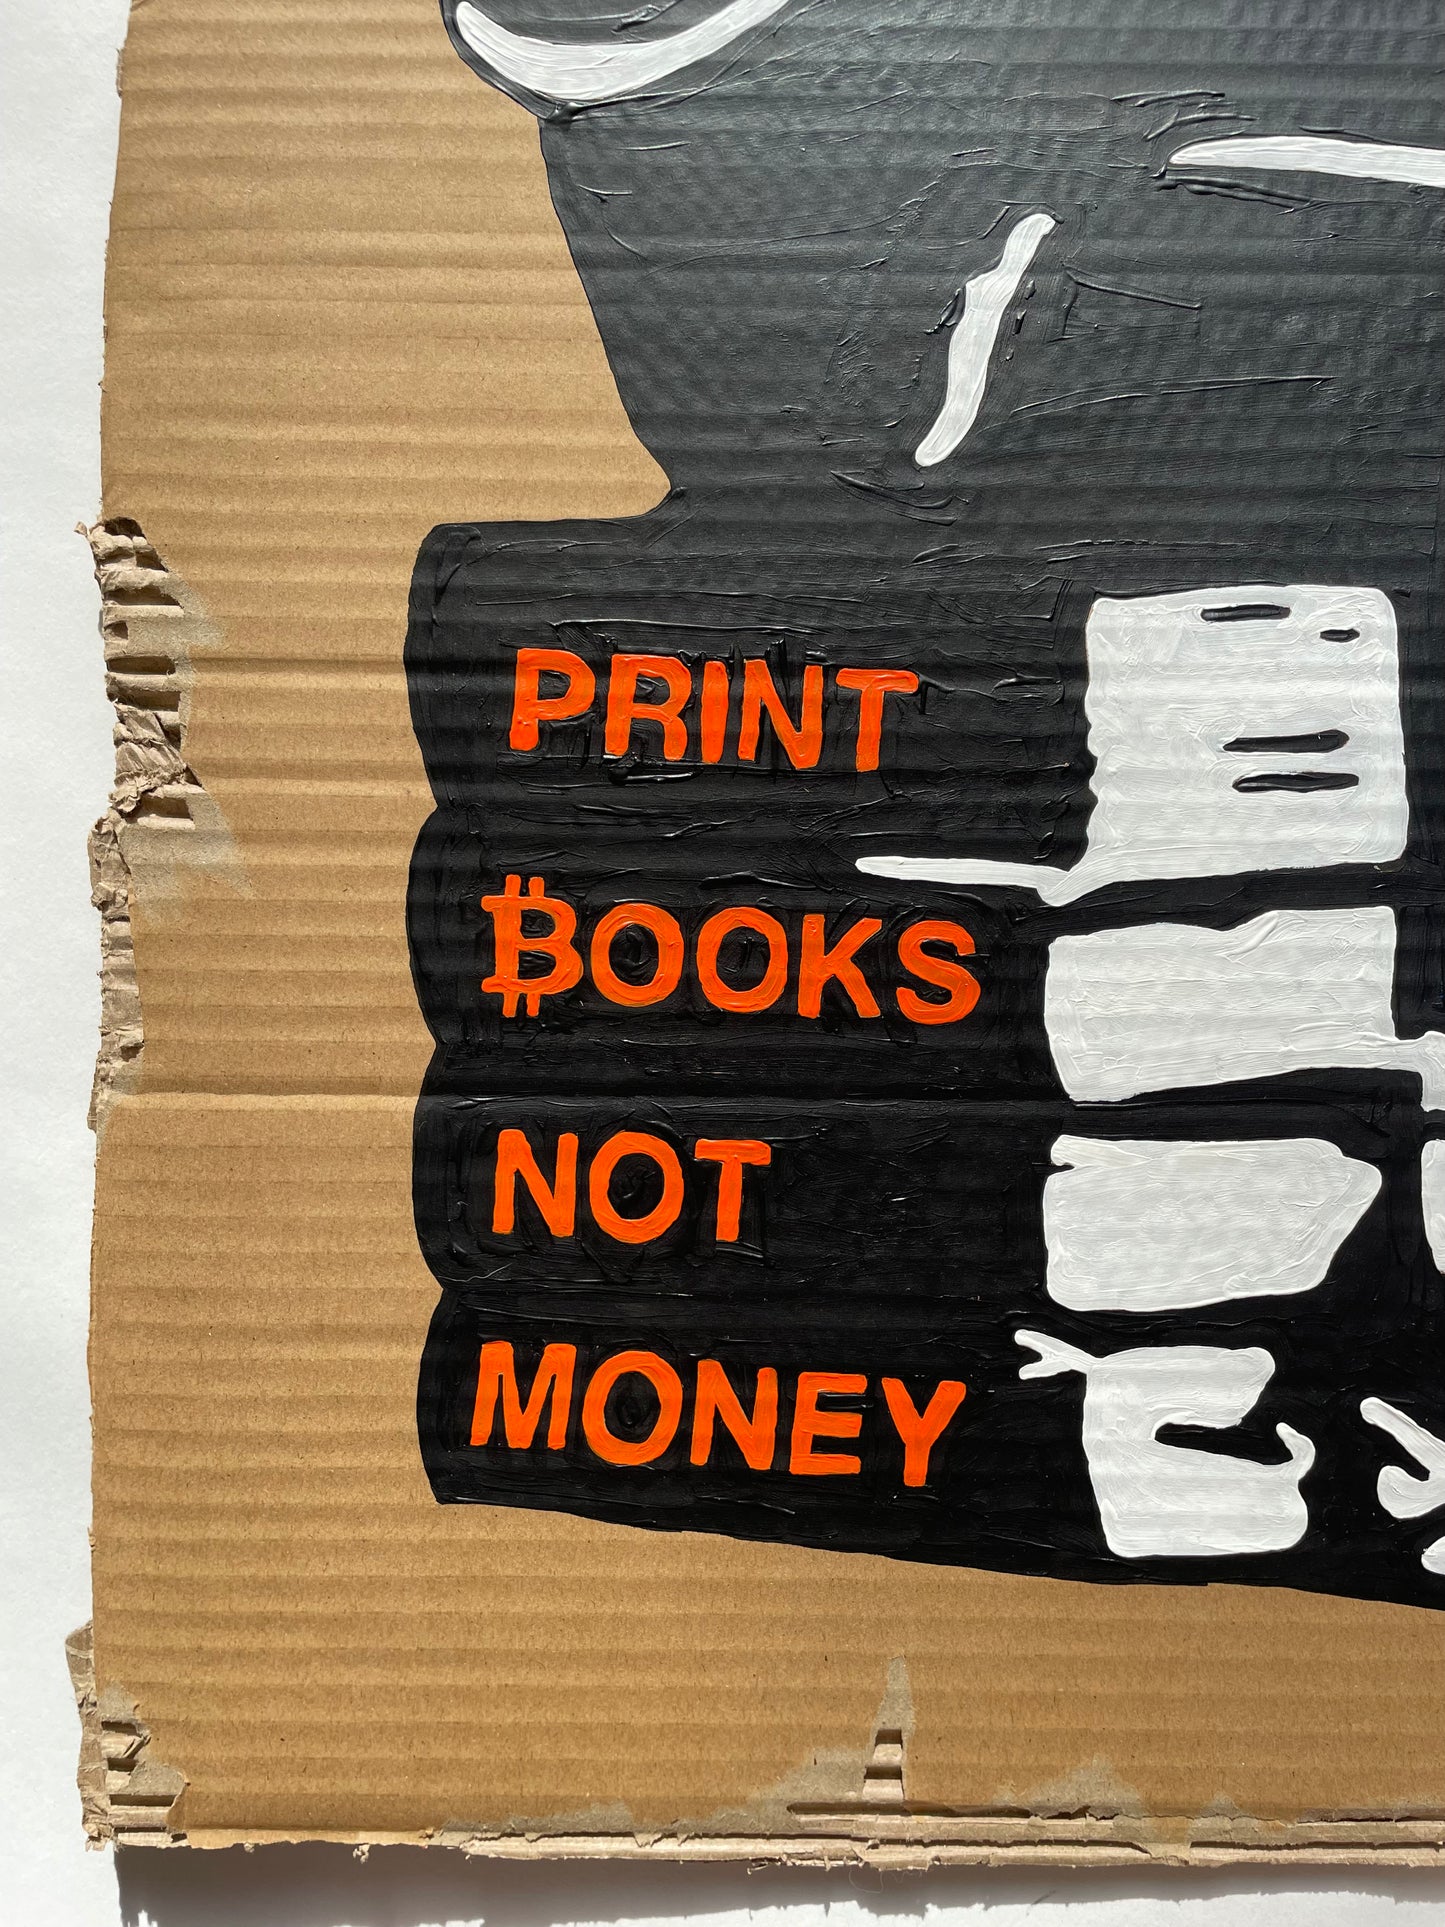 Acrylic Paint on Cardboard "Print Books, Not Money"